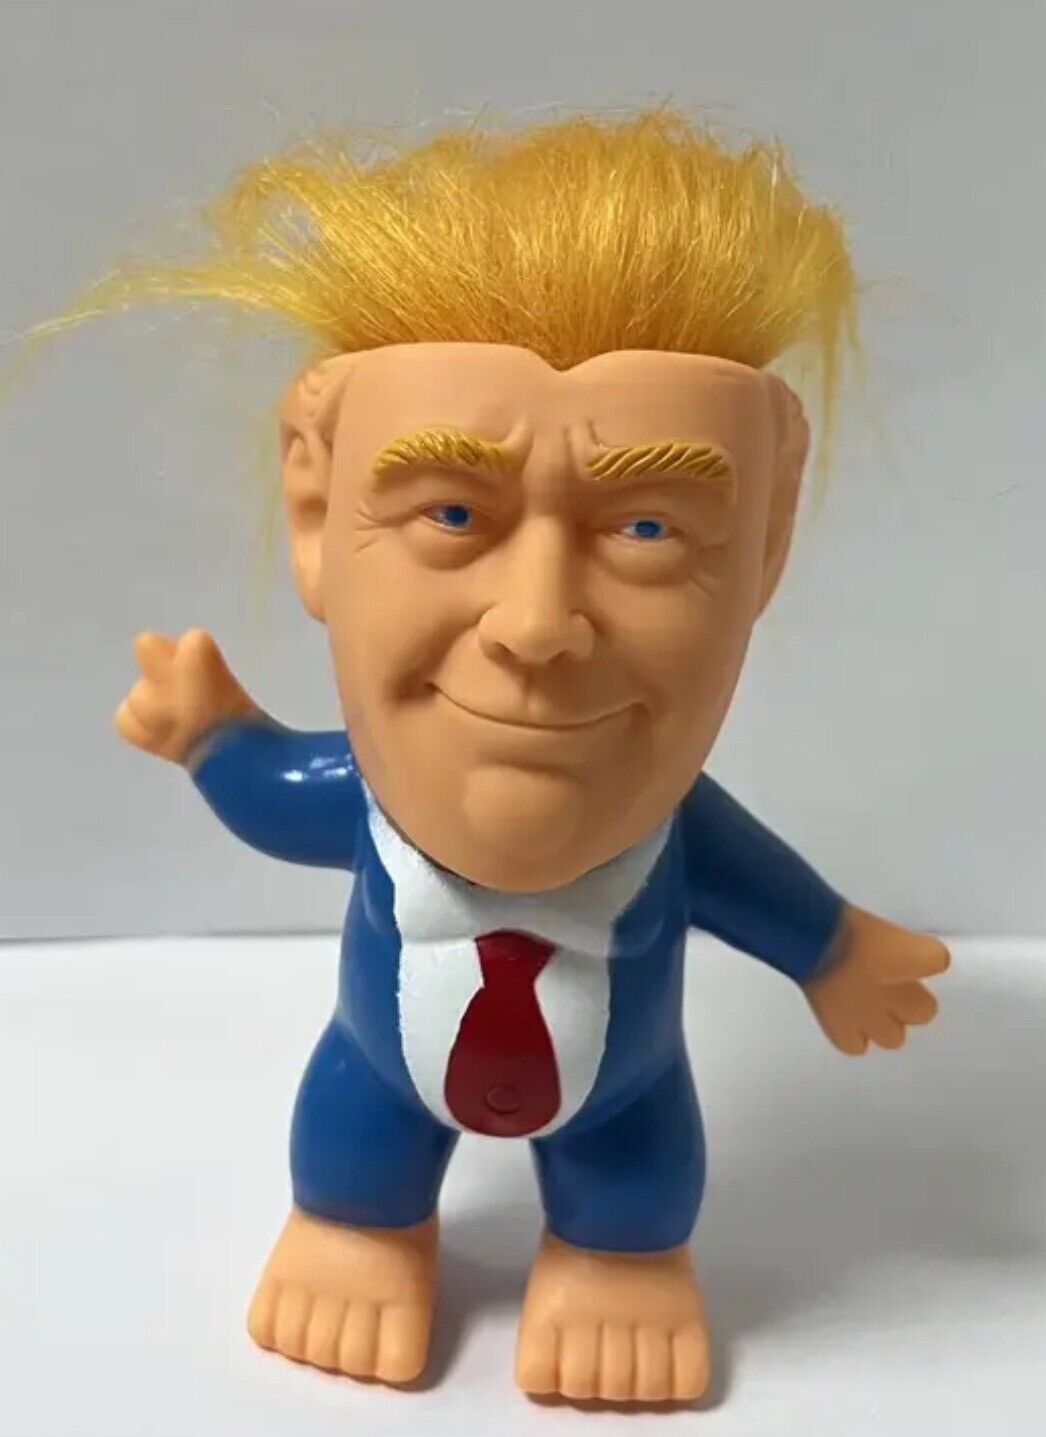 4” President Donald Trump Troll Doll, Patriotic, MAGA, Make America Great Again